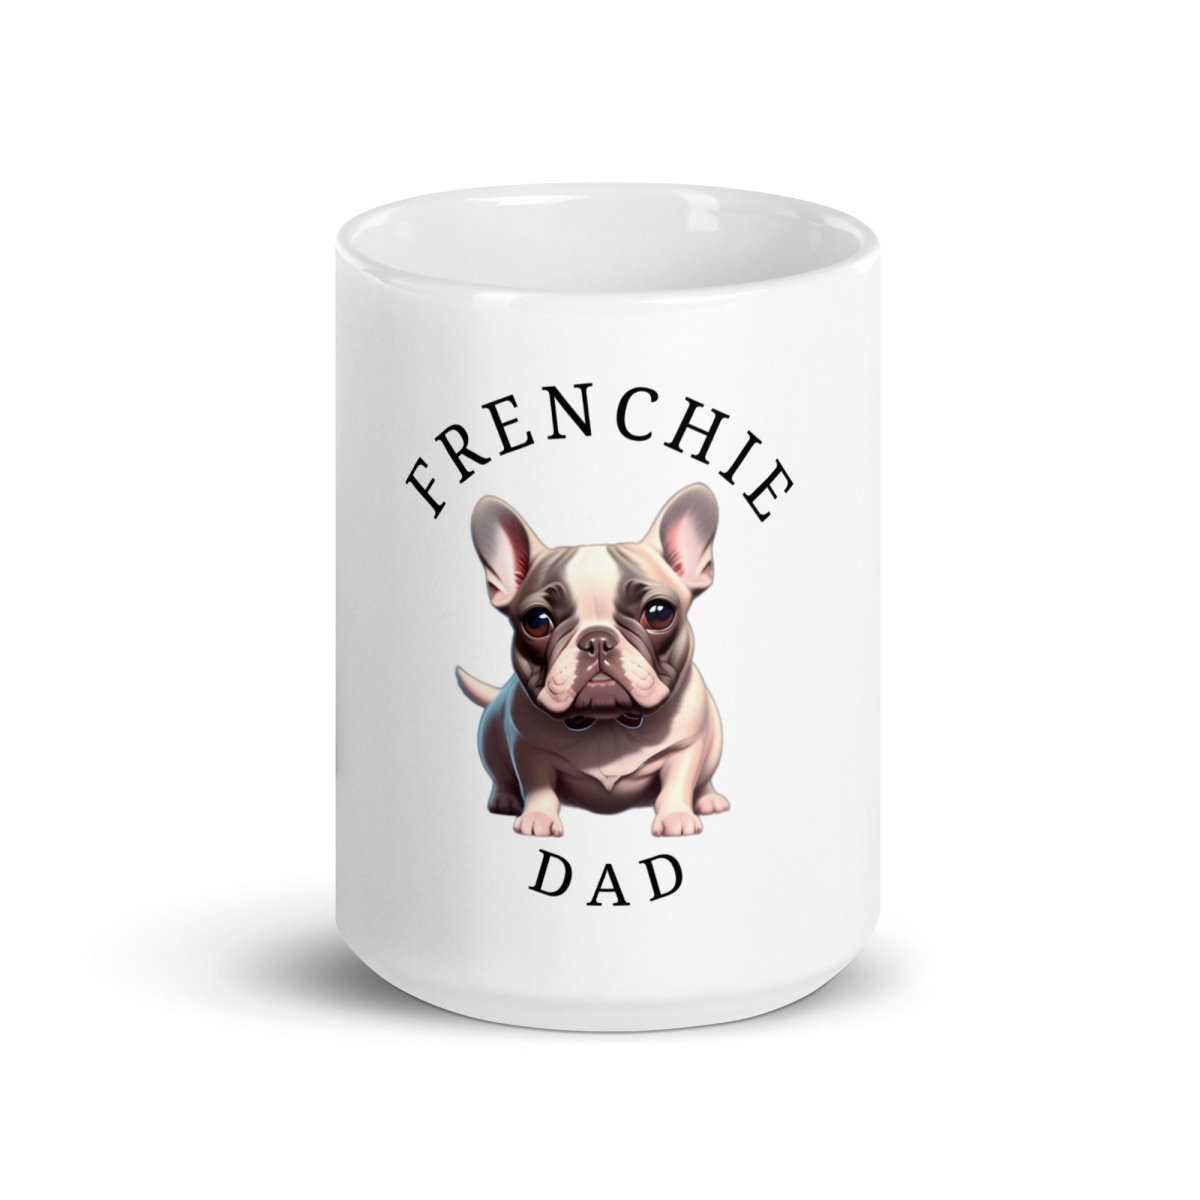 Frenchie Dad Mug - Funny Nikko